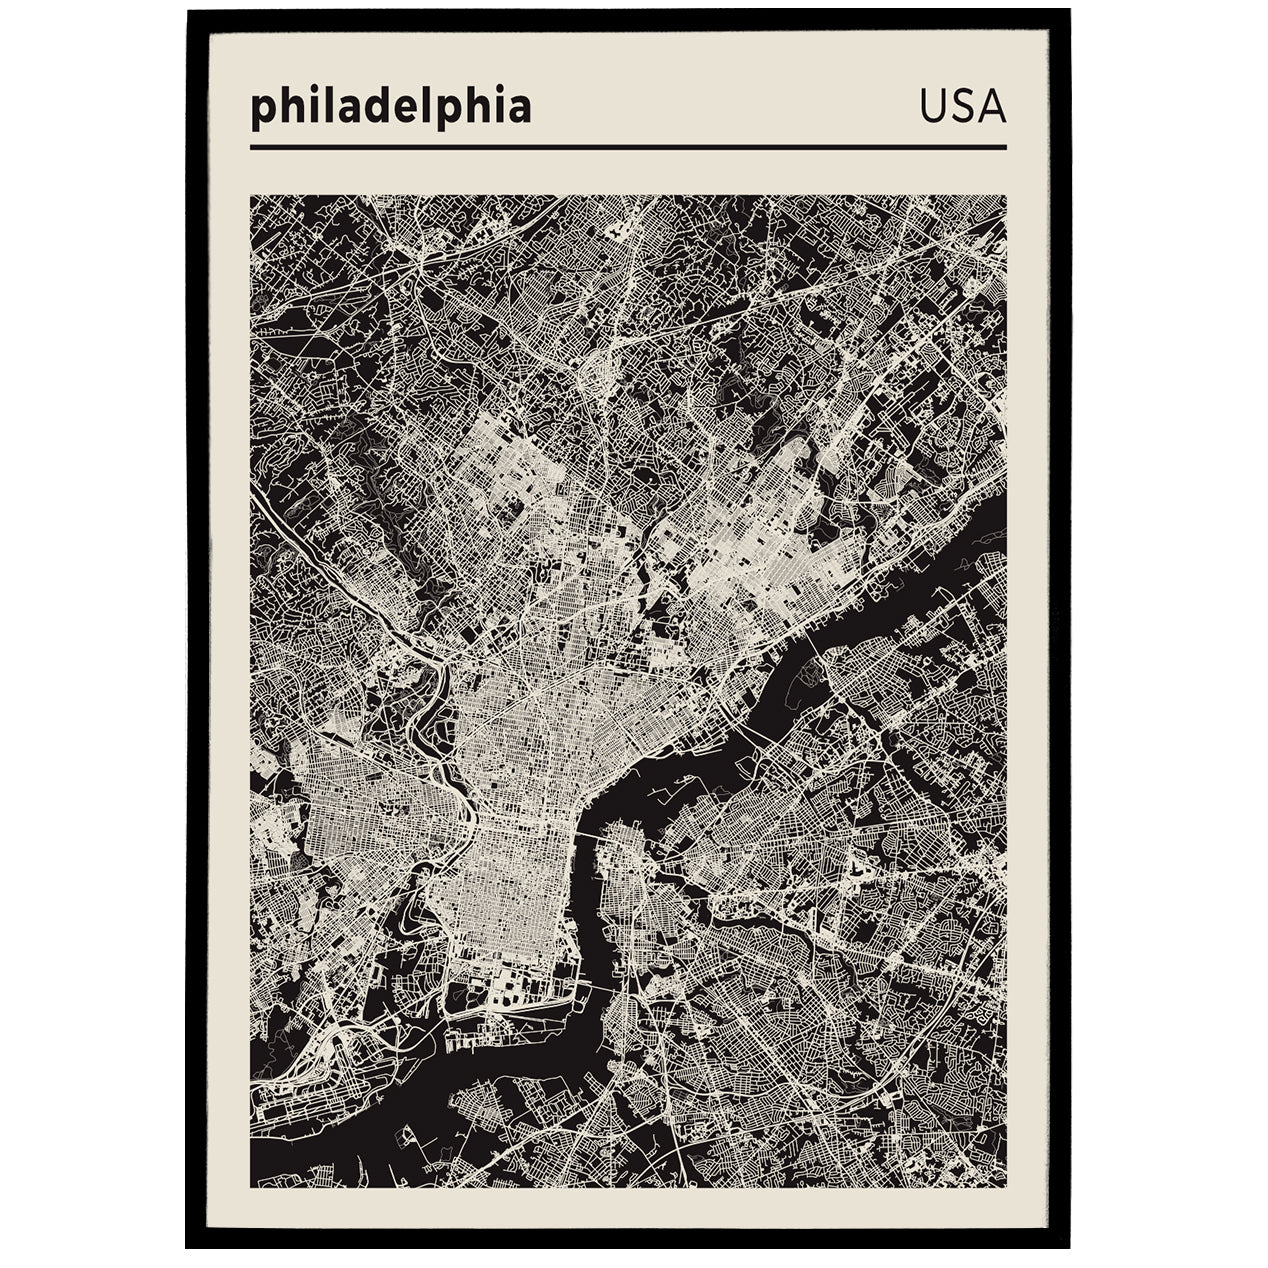 Philadelphia - USA | Black and White City Map